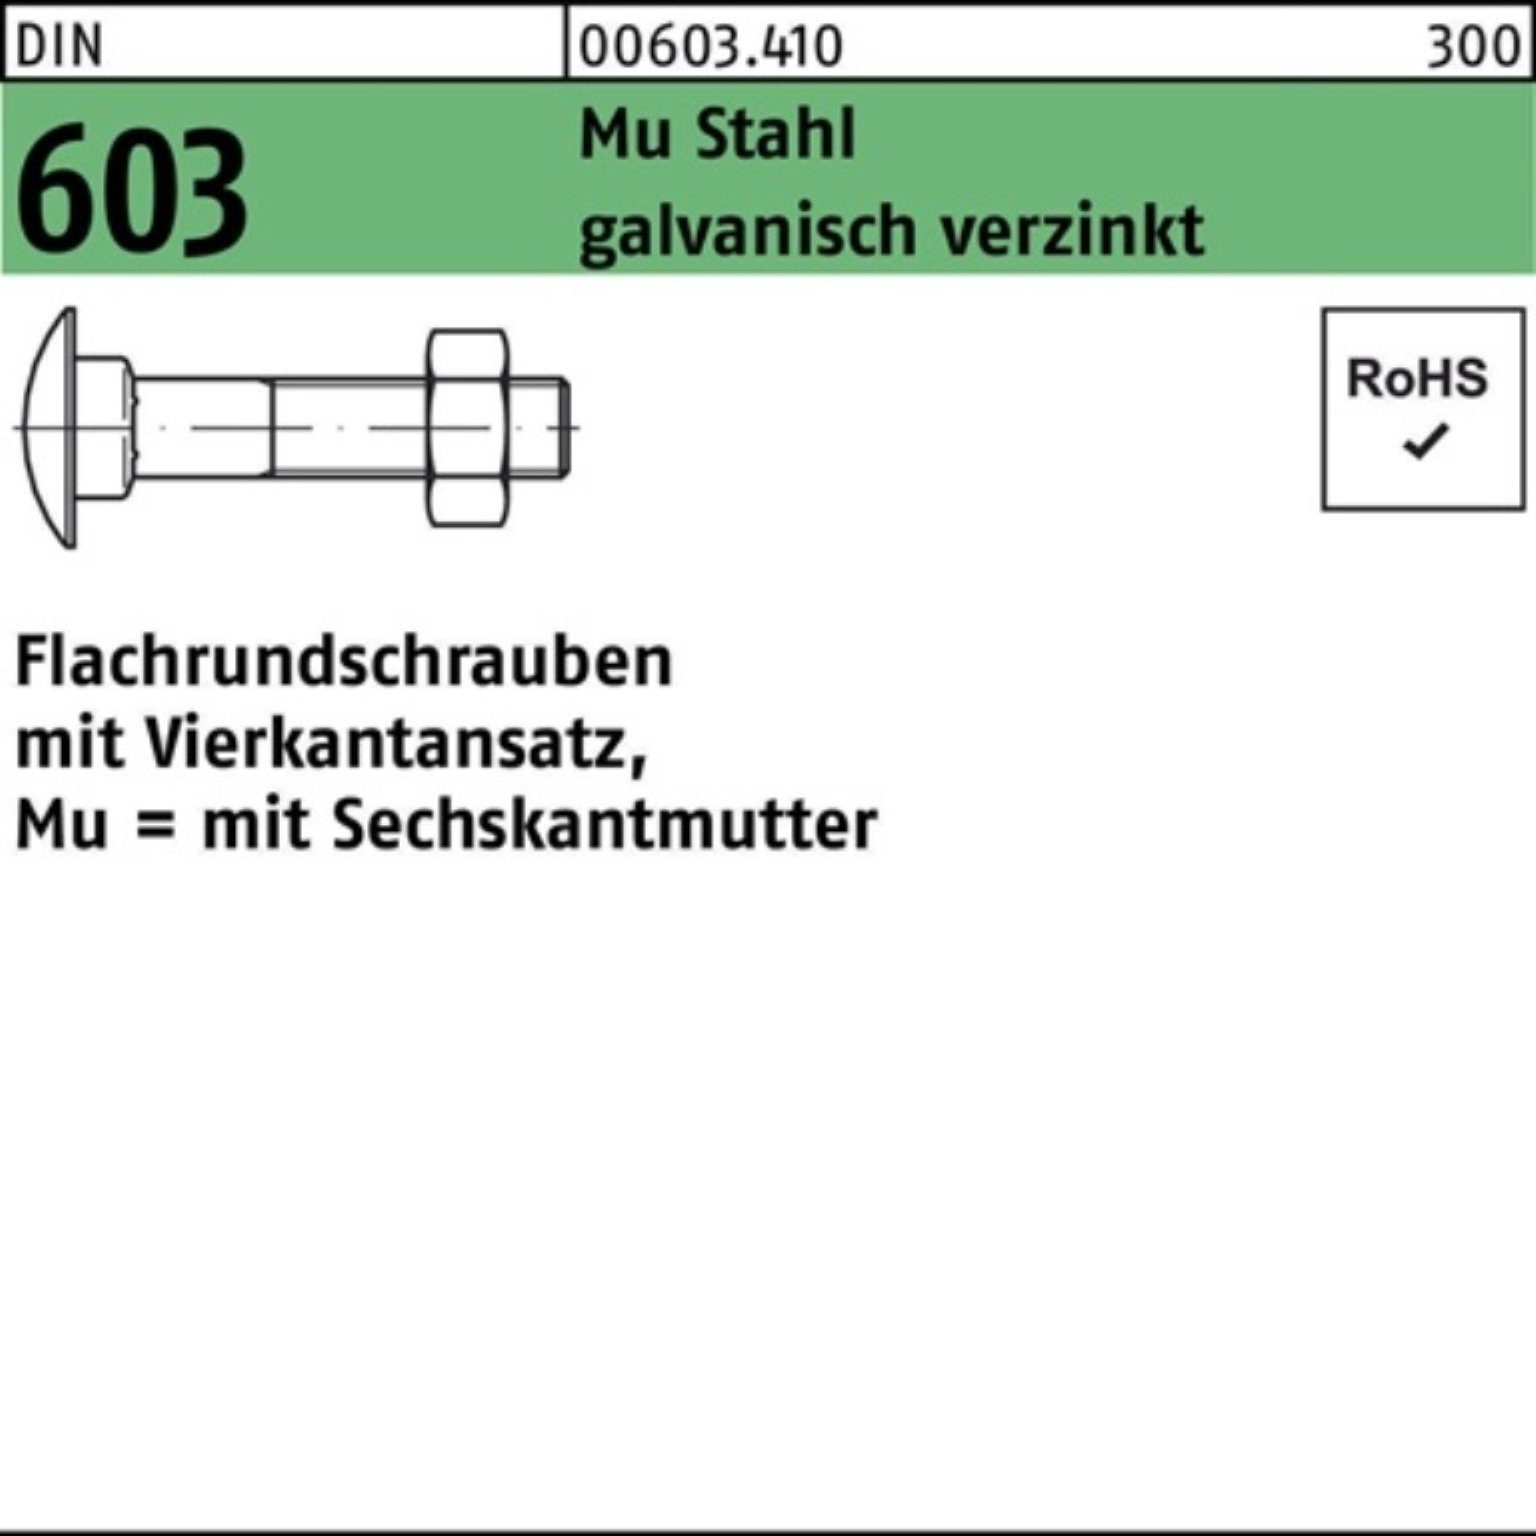 200er Vierkantansatz/6-ktmutter 603 Flachrundschraube M10x25 Reyher Schraube Pack DIN